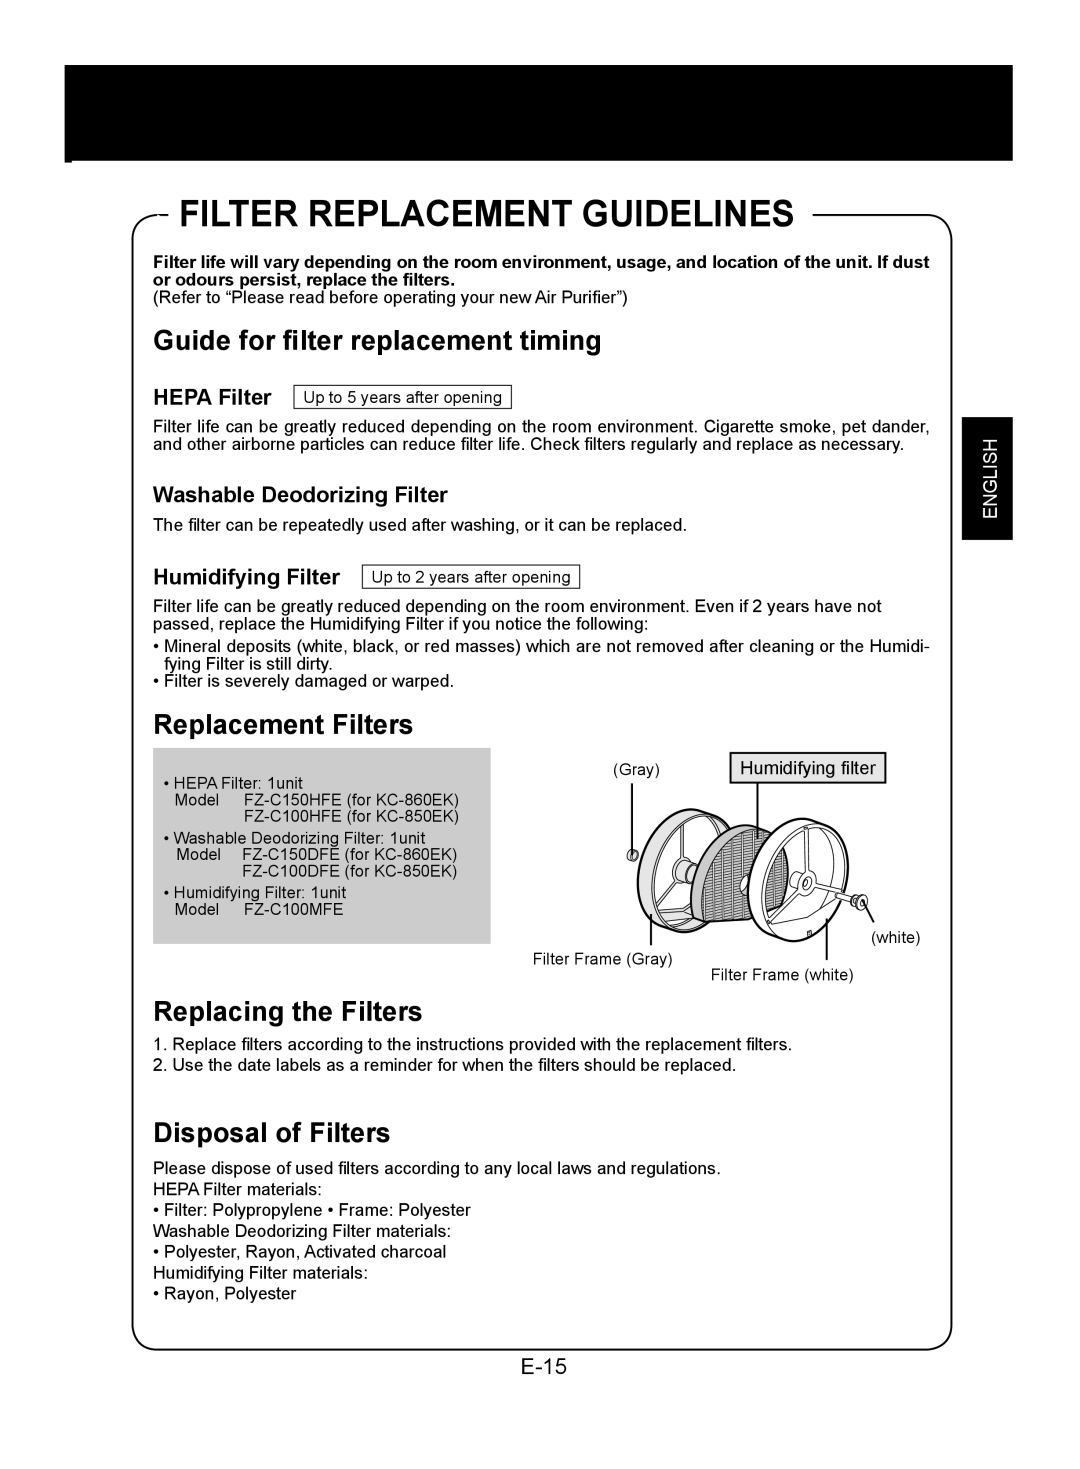 Sharp KC-850EK Filter Replacement Guidelines, Guide for filter replacement timing, Replacement Filters, E-15, English 